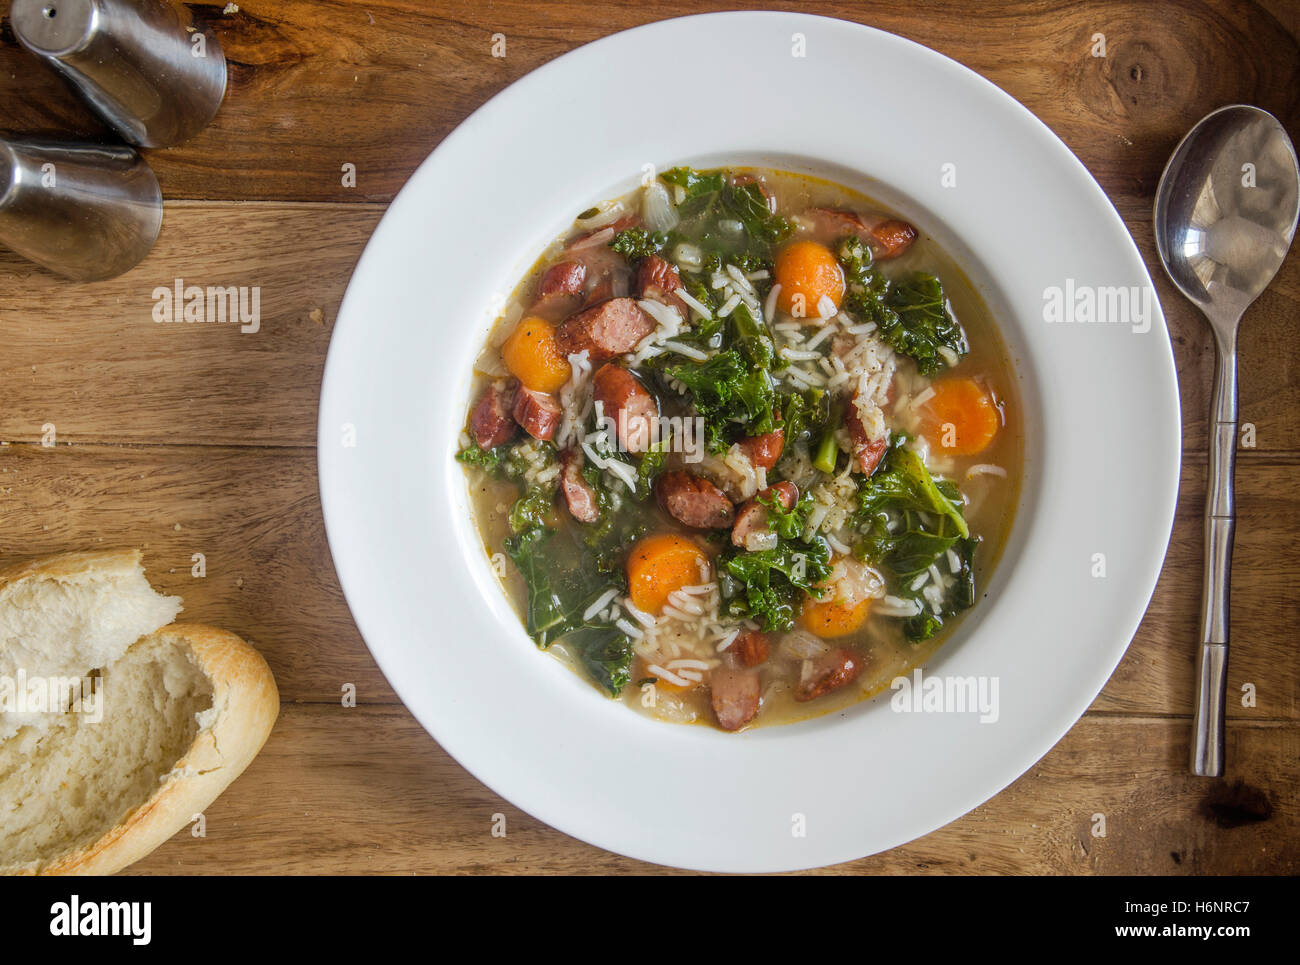 Polish soup with sausage, rice and kale Stock Photo